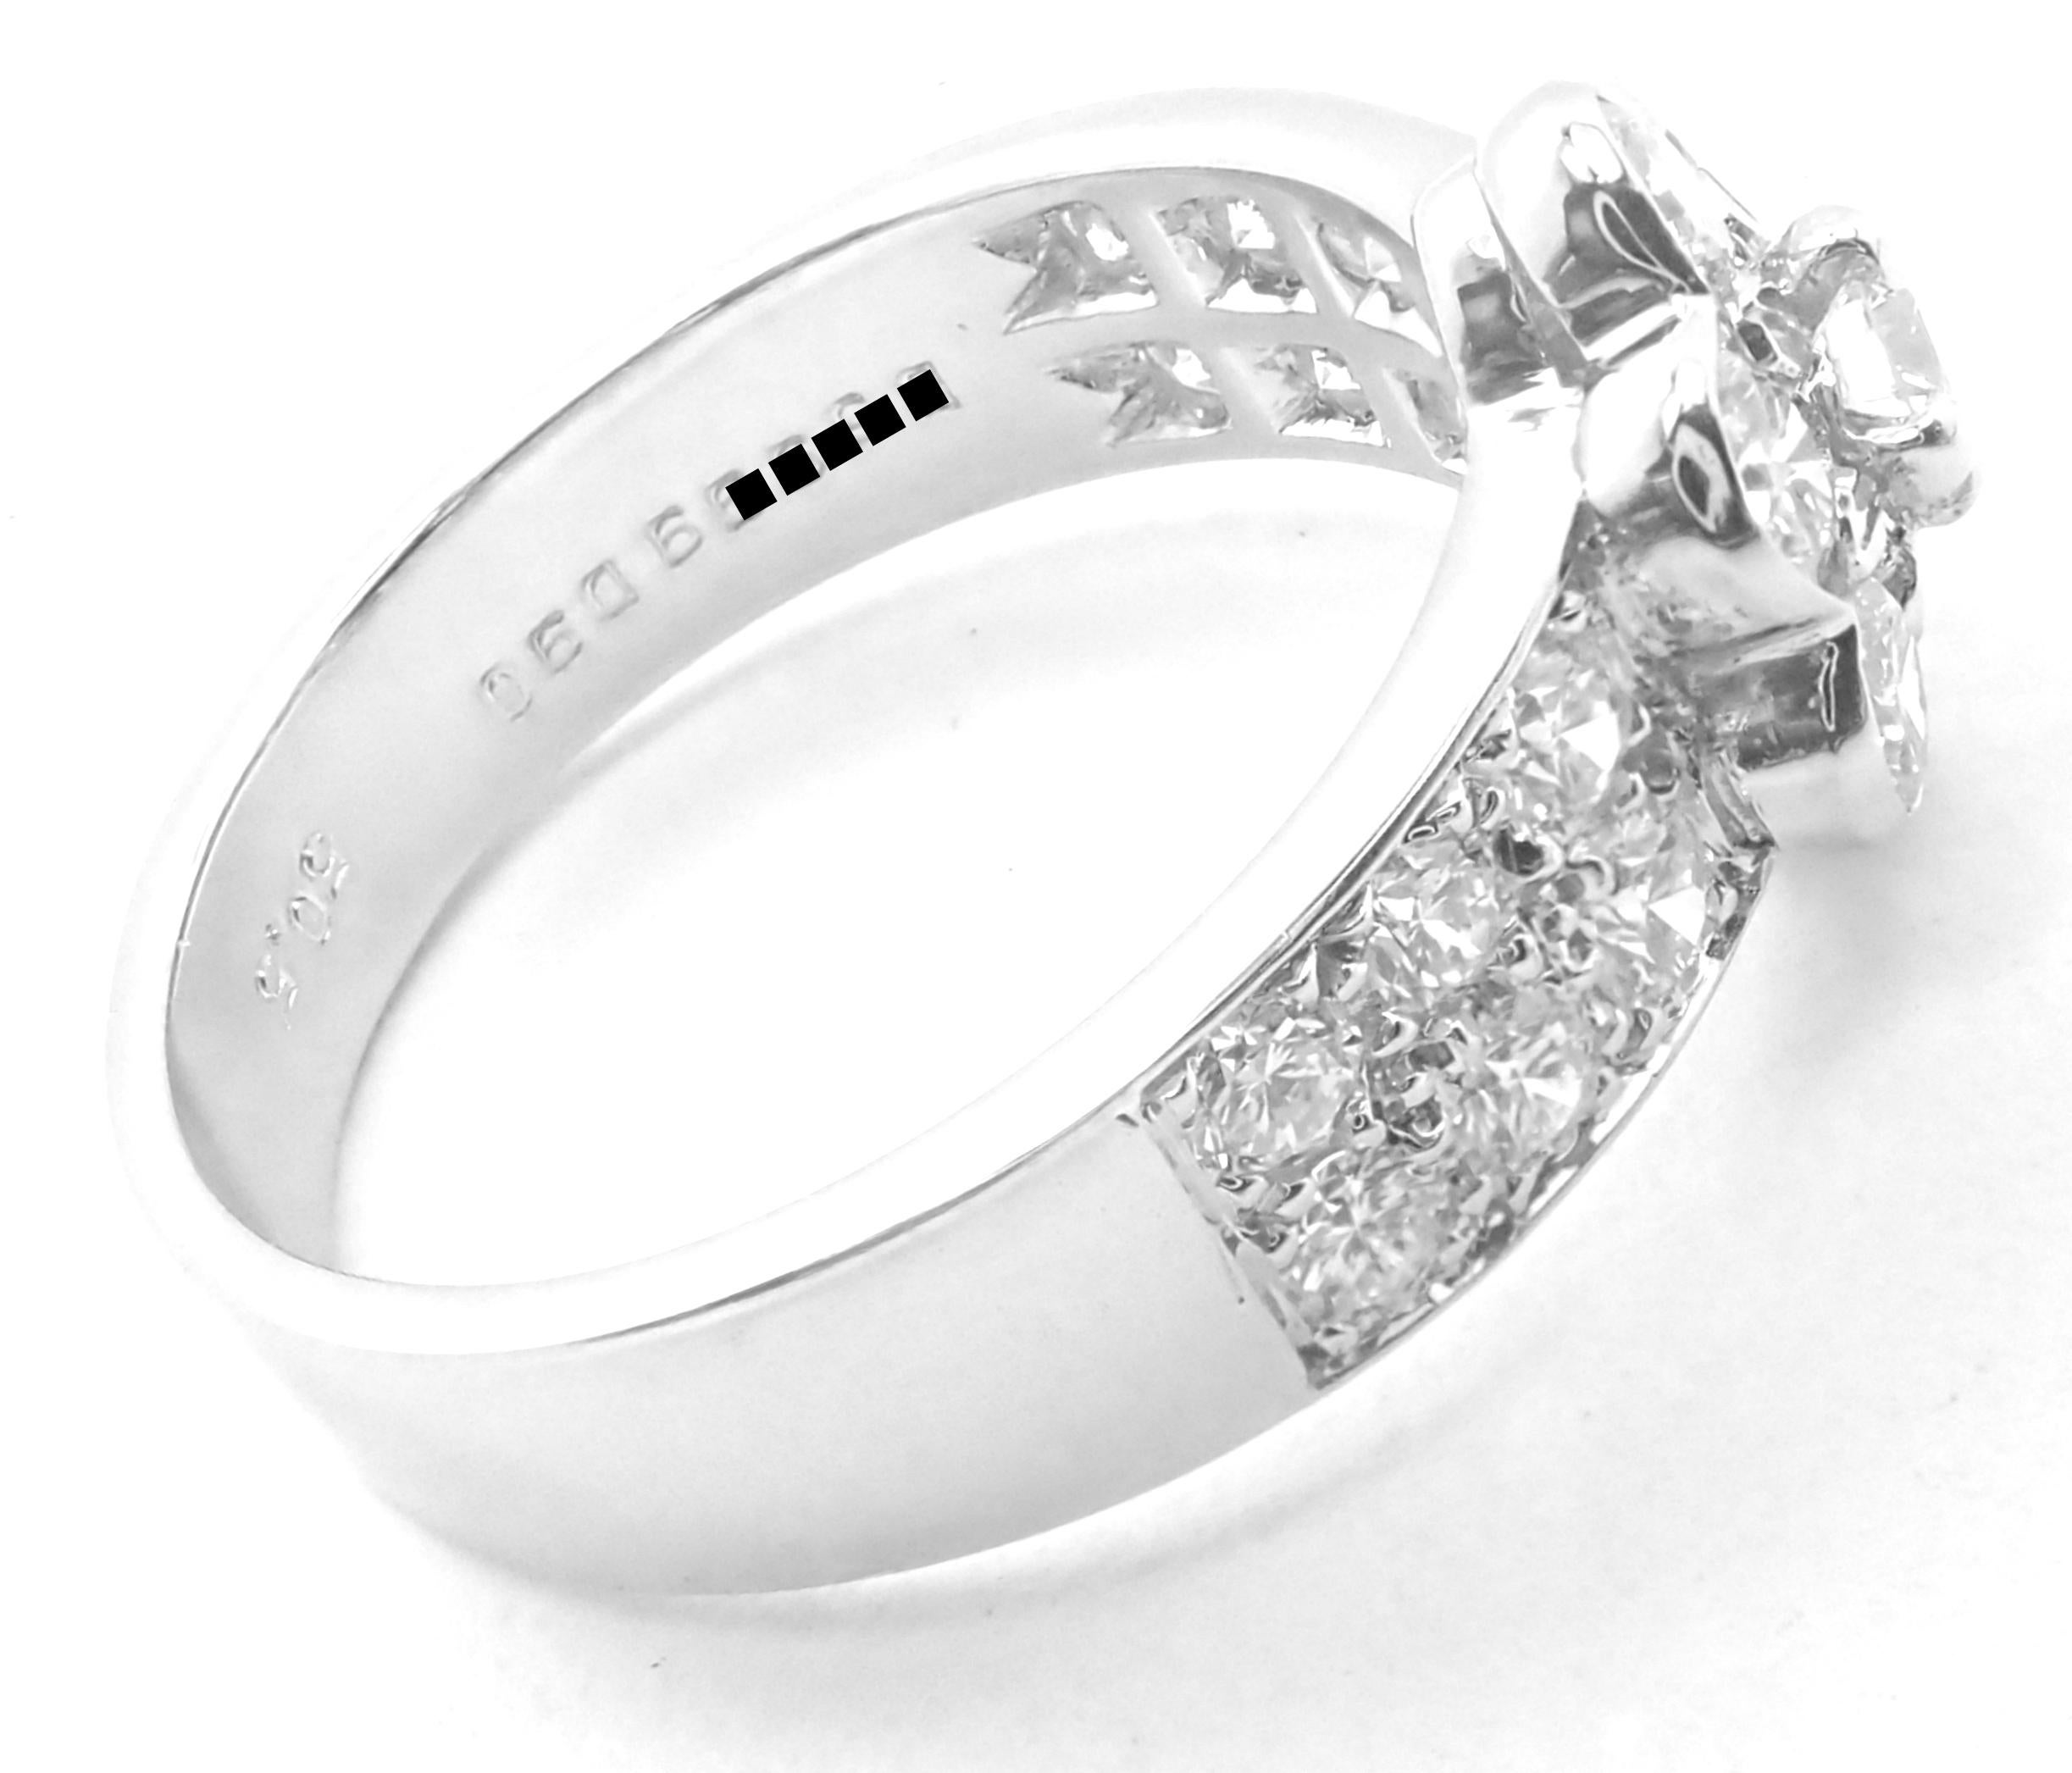 Platinum Diamond Diamond Fleurette Flower Ring by Van Cleef & Arpels. 
With 19 Round brilliant cut diamonds total weight approximately 1.05ct E/VVS1
Details:
Size:  European 50.5  US 5.5
Width: 9.5mm
Weight: 5.7 grams
Stamped Hallmarks: Van Cleef &